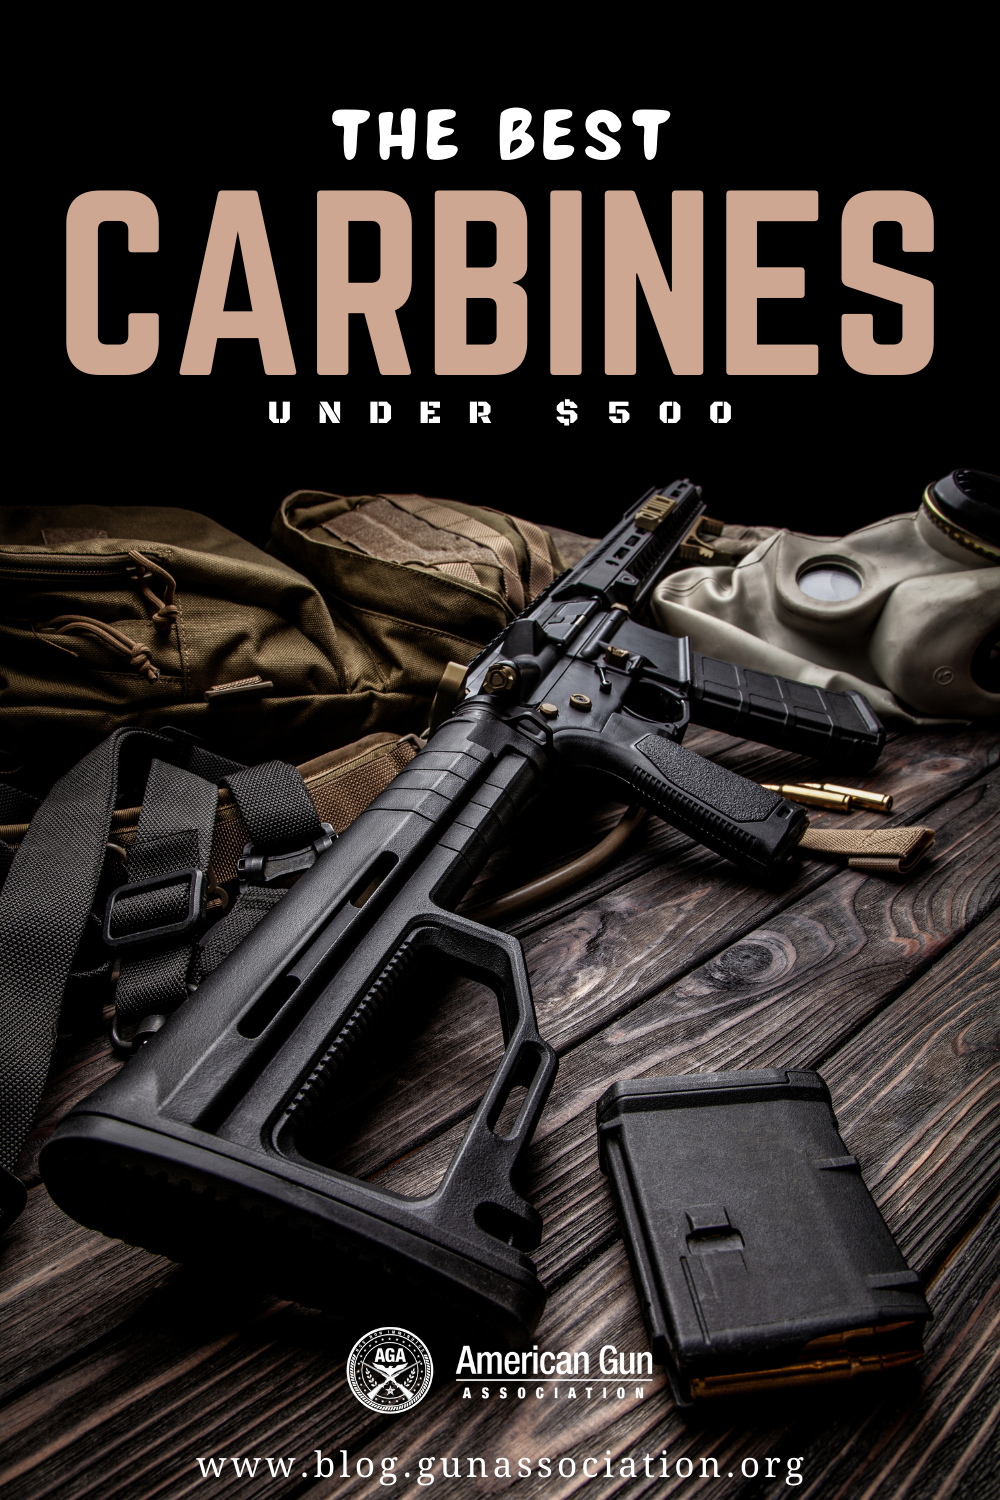 9mm Carbines Under $500